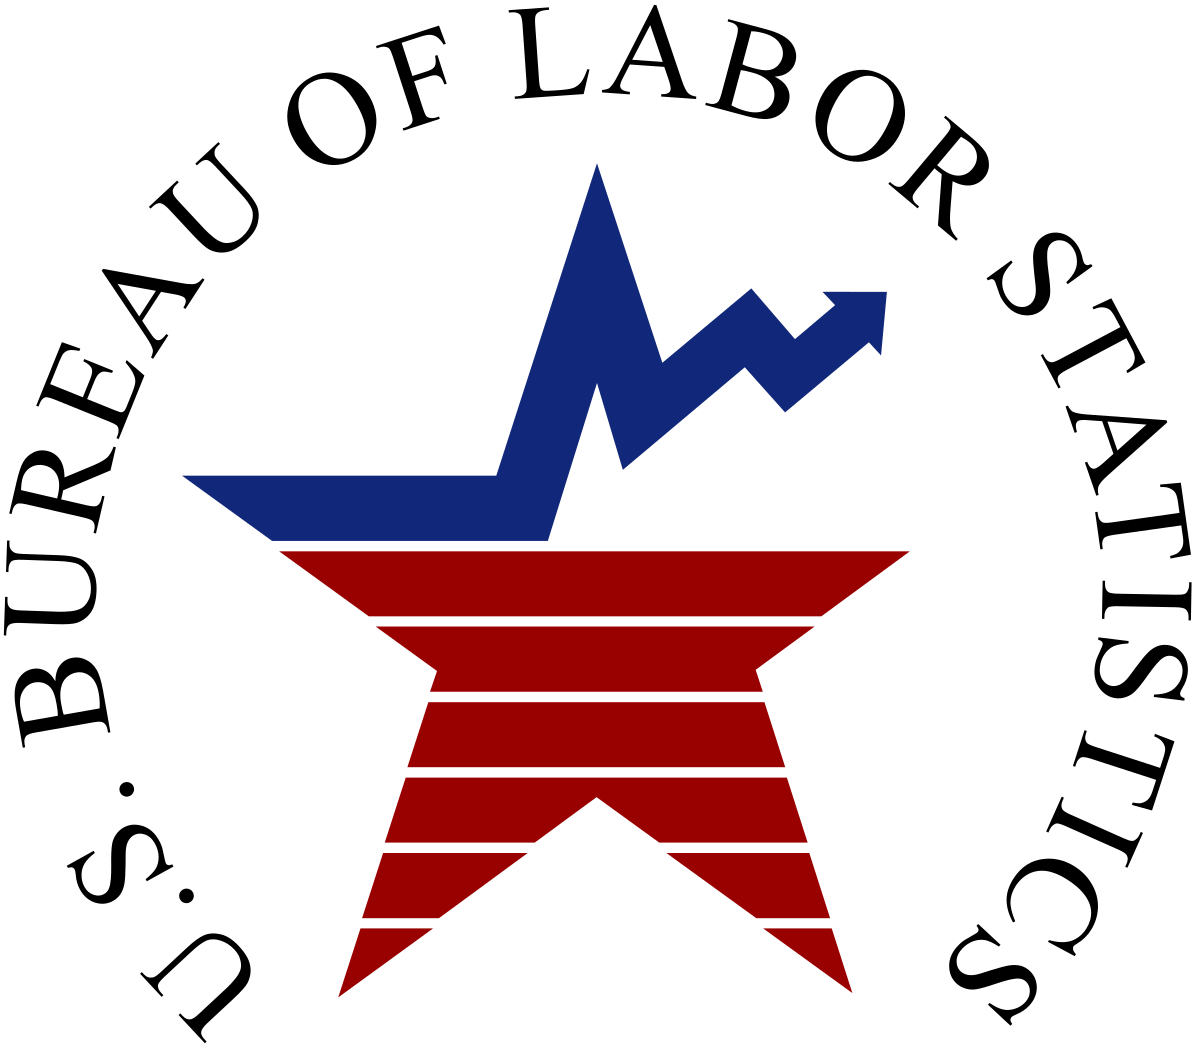 US Bureau of Labor Statistics logo with link to Occupational Outlook Handbook on website